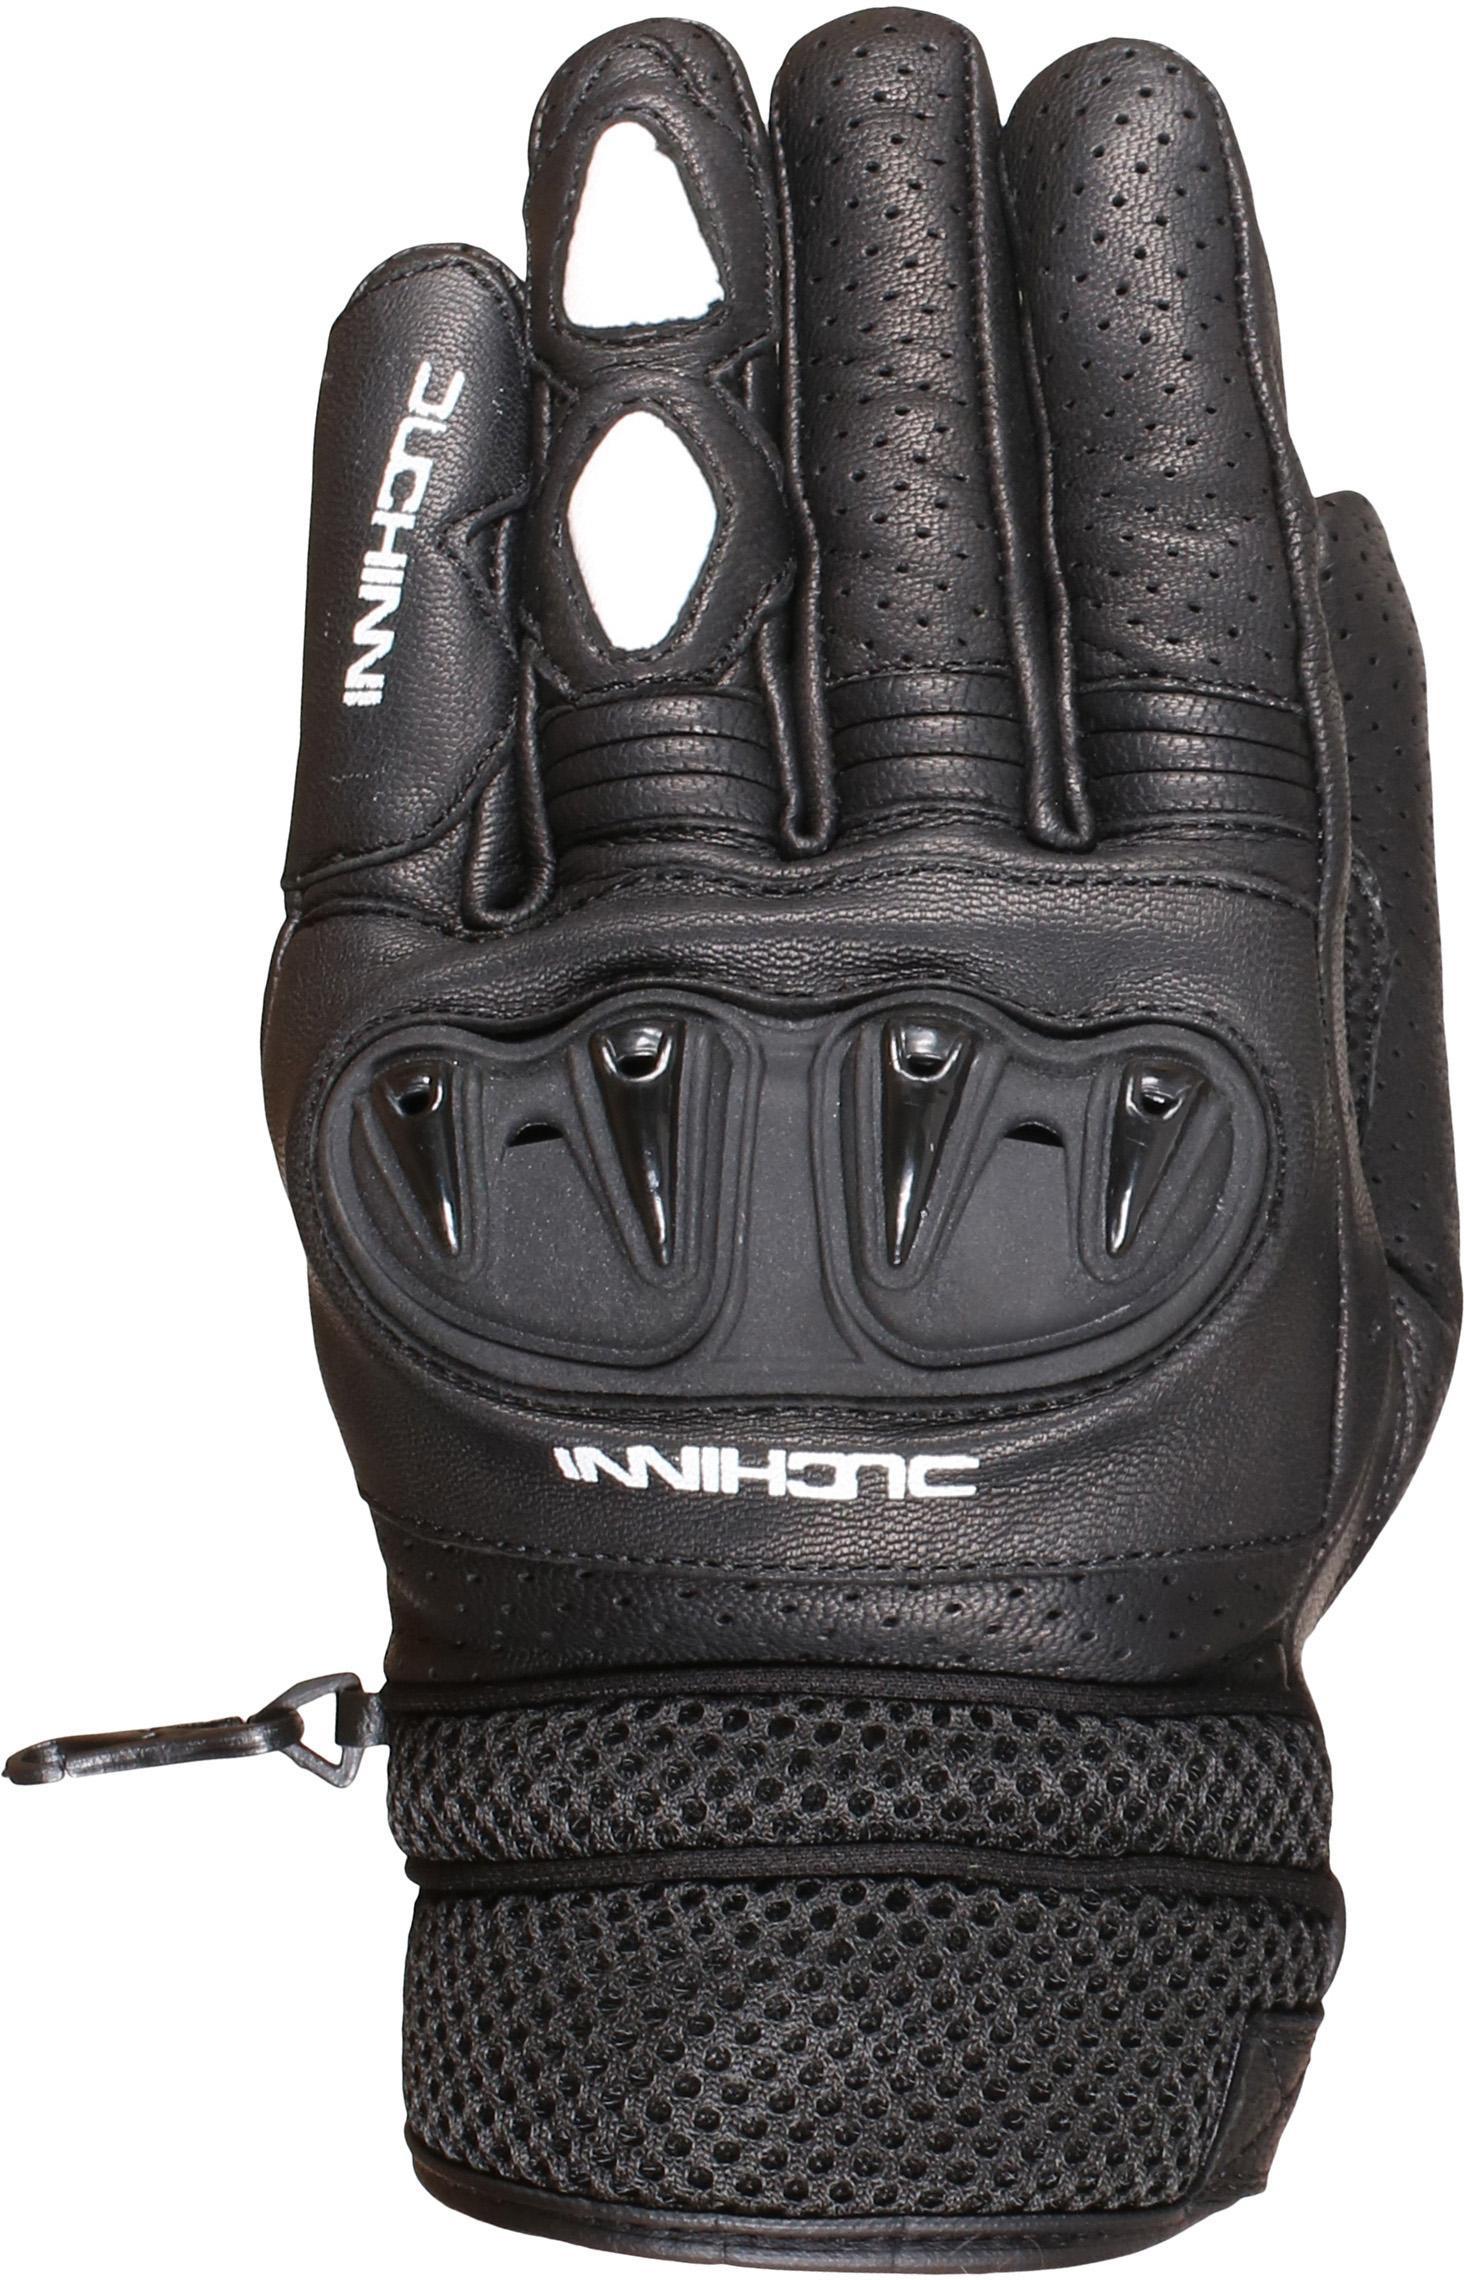 Duchinni Ostro Motorcycle Gloves - Black, L